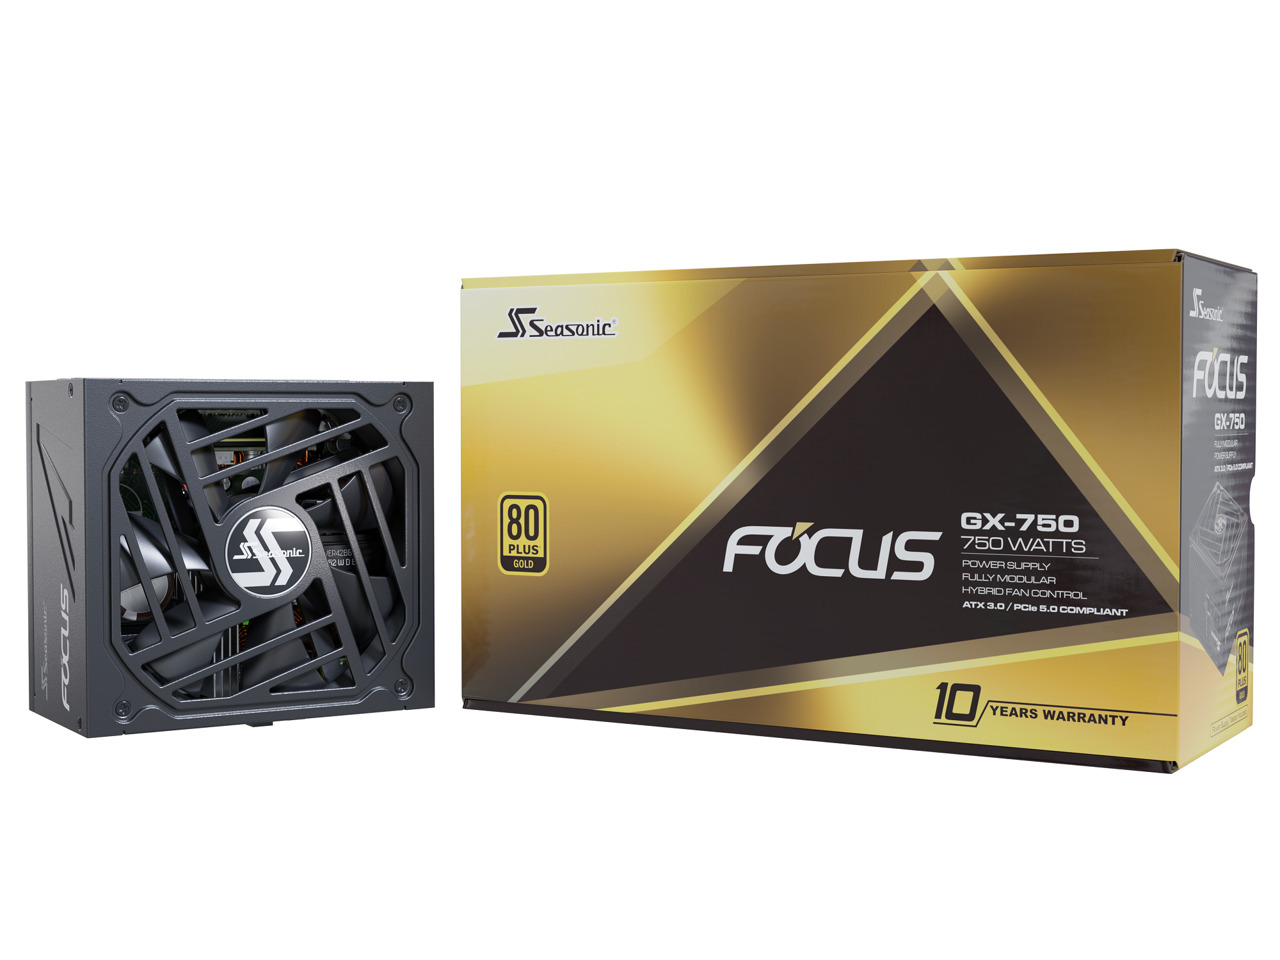 Seasonic 750W FOCUS V3 GX-750, 80+ Gold, ATX 3.0 & PCIe 5.0 Ready, Full-Modular